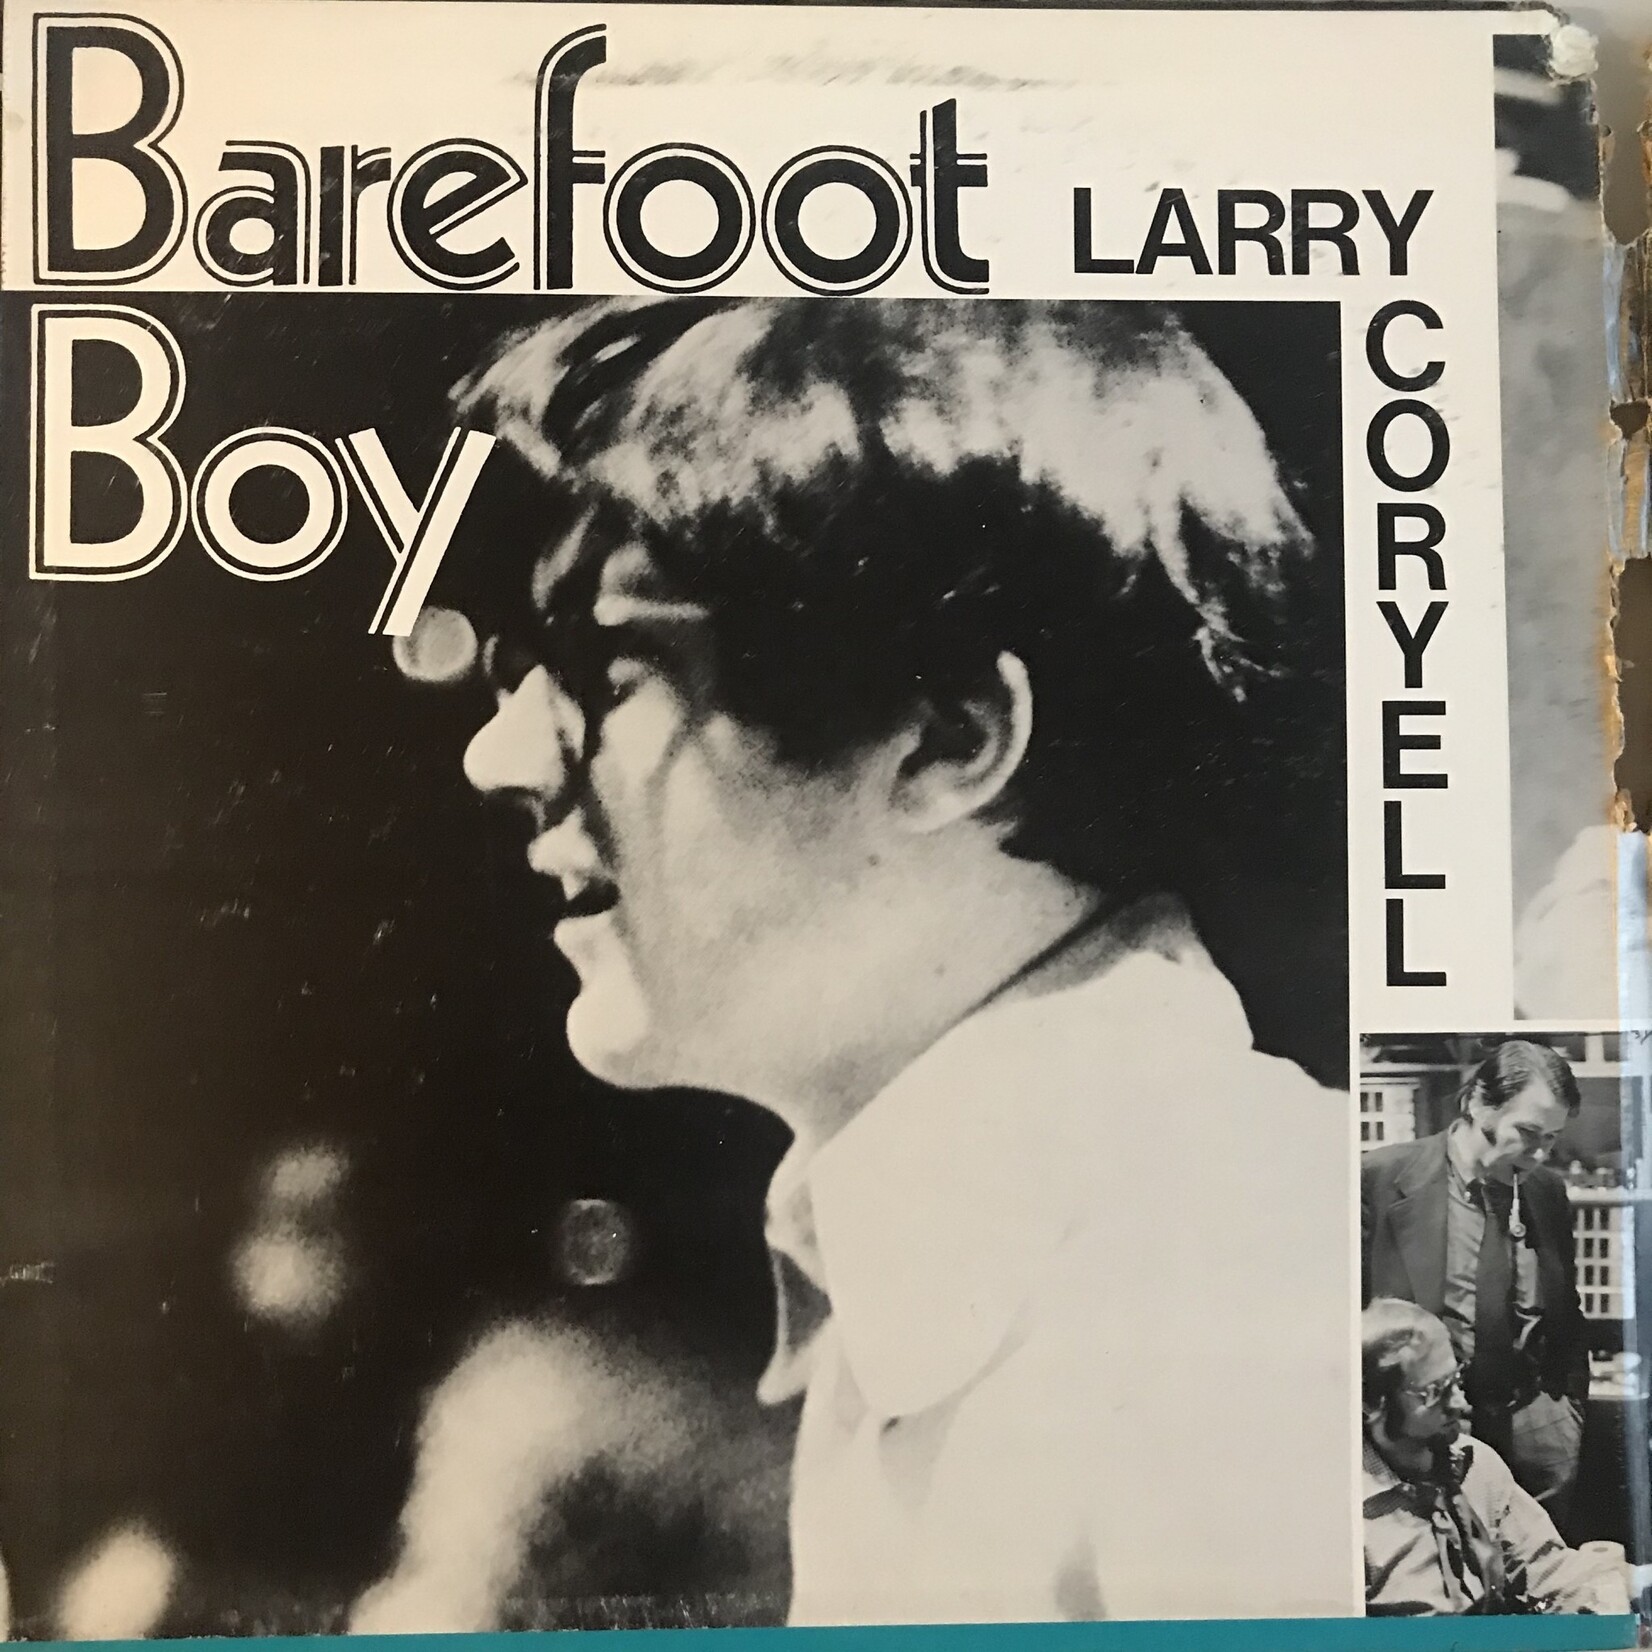 Larry Coryell - Barefoot Boy - Vinyl LP (USED)